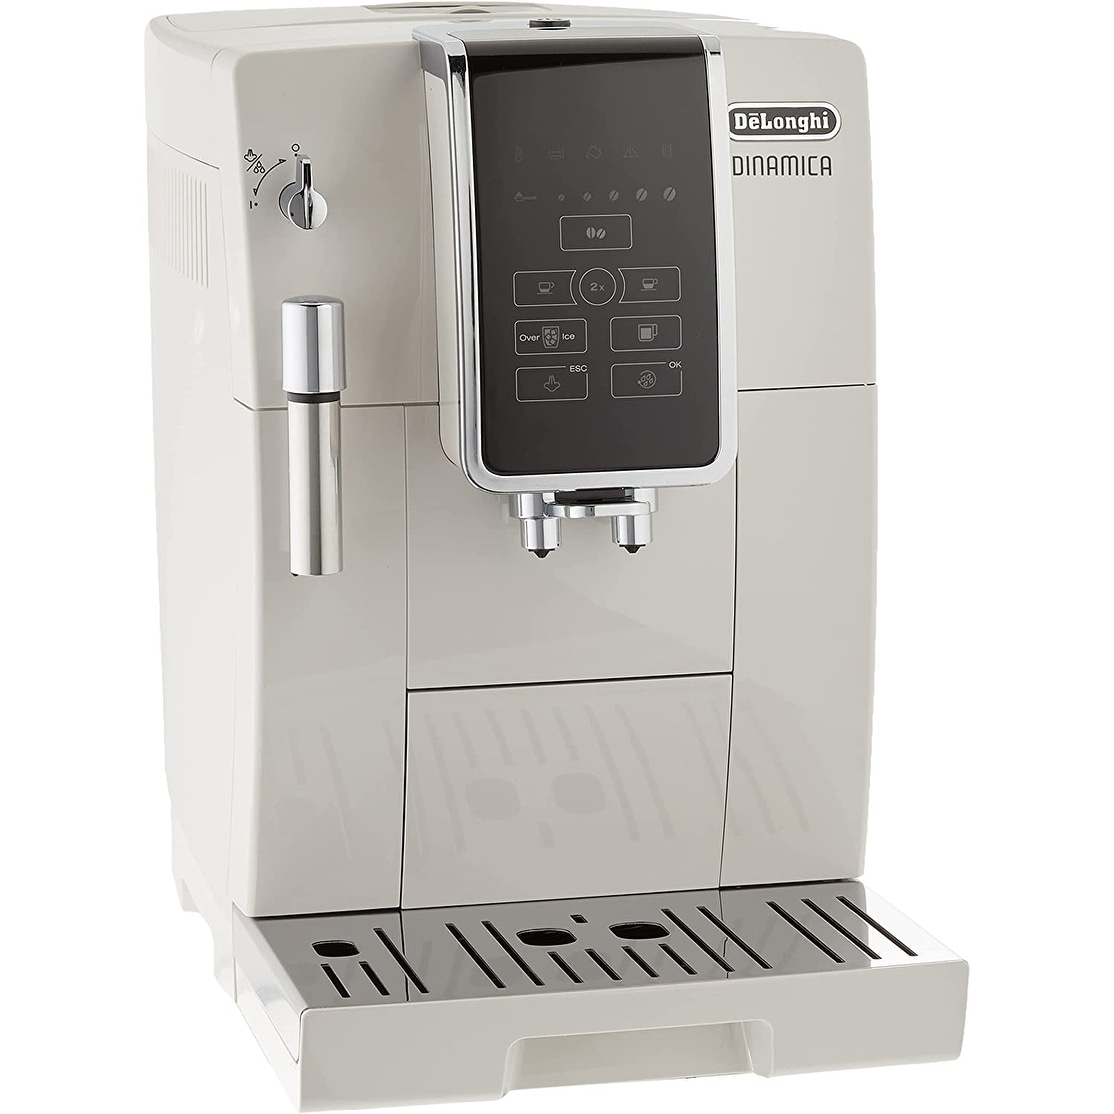 https://ak1.ostkcdn.com/images/products/is/images/direct/3d92a12a06341efbda0ab5c2cb5bf6076ba92aa6/De%27Longhi-Dinamica-Automatic-Coffee-%26-Espresso-Machine.jpg